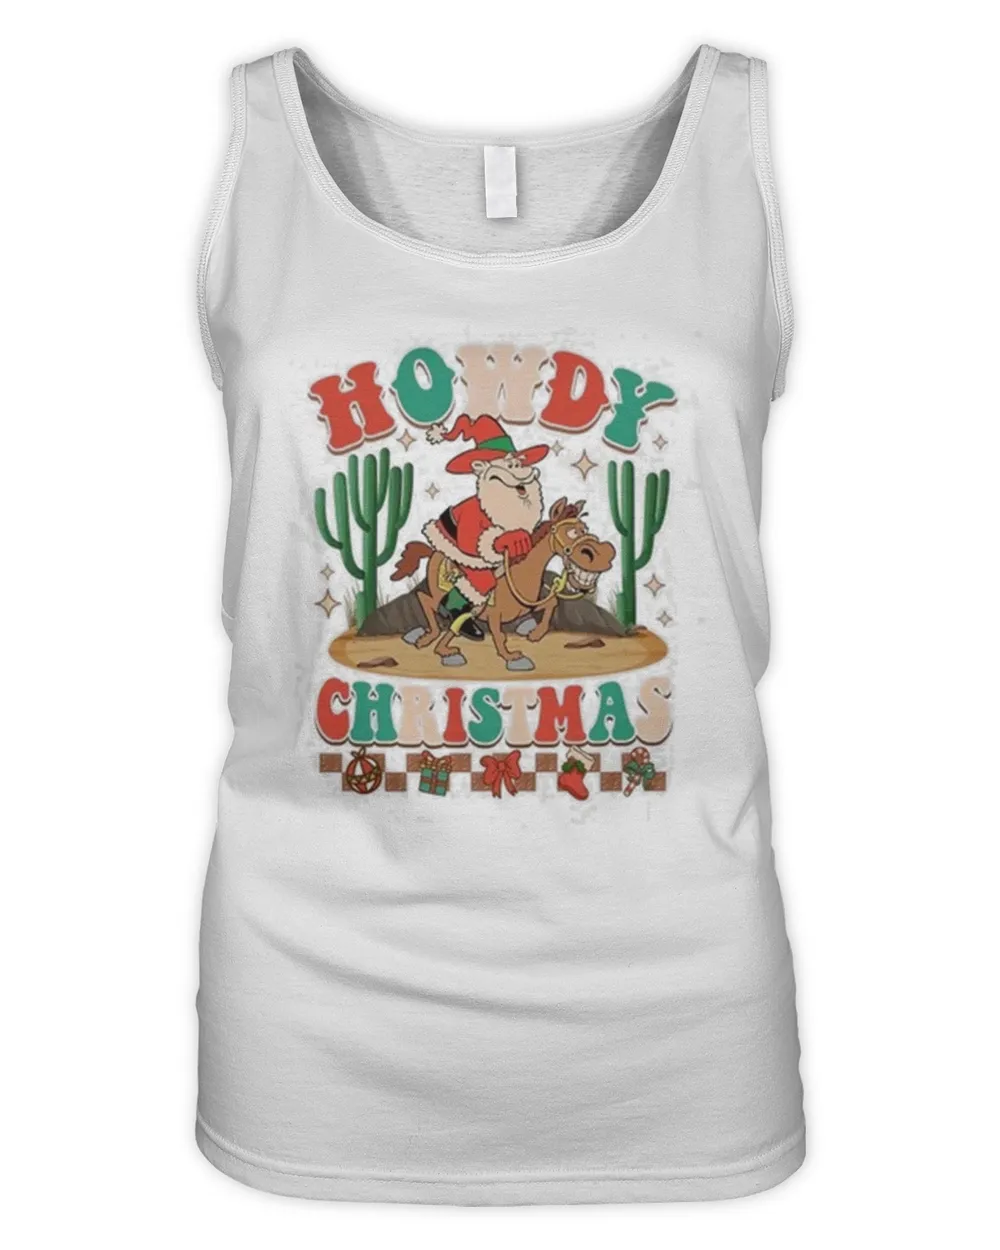 Howdy Christmas Shirt